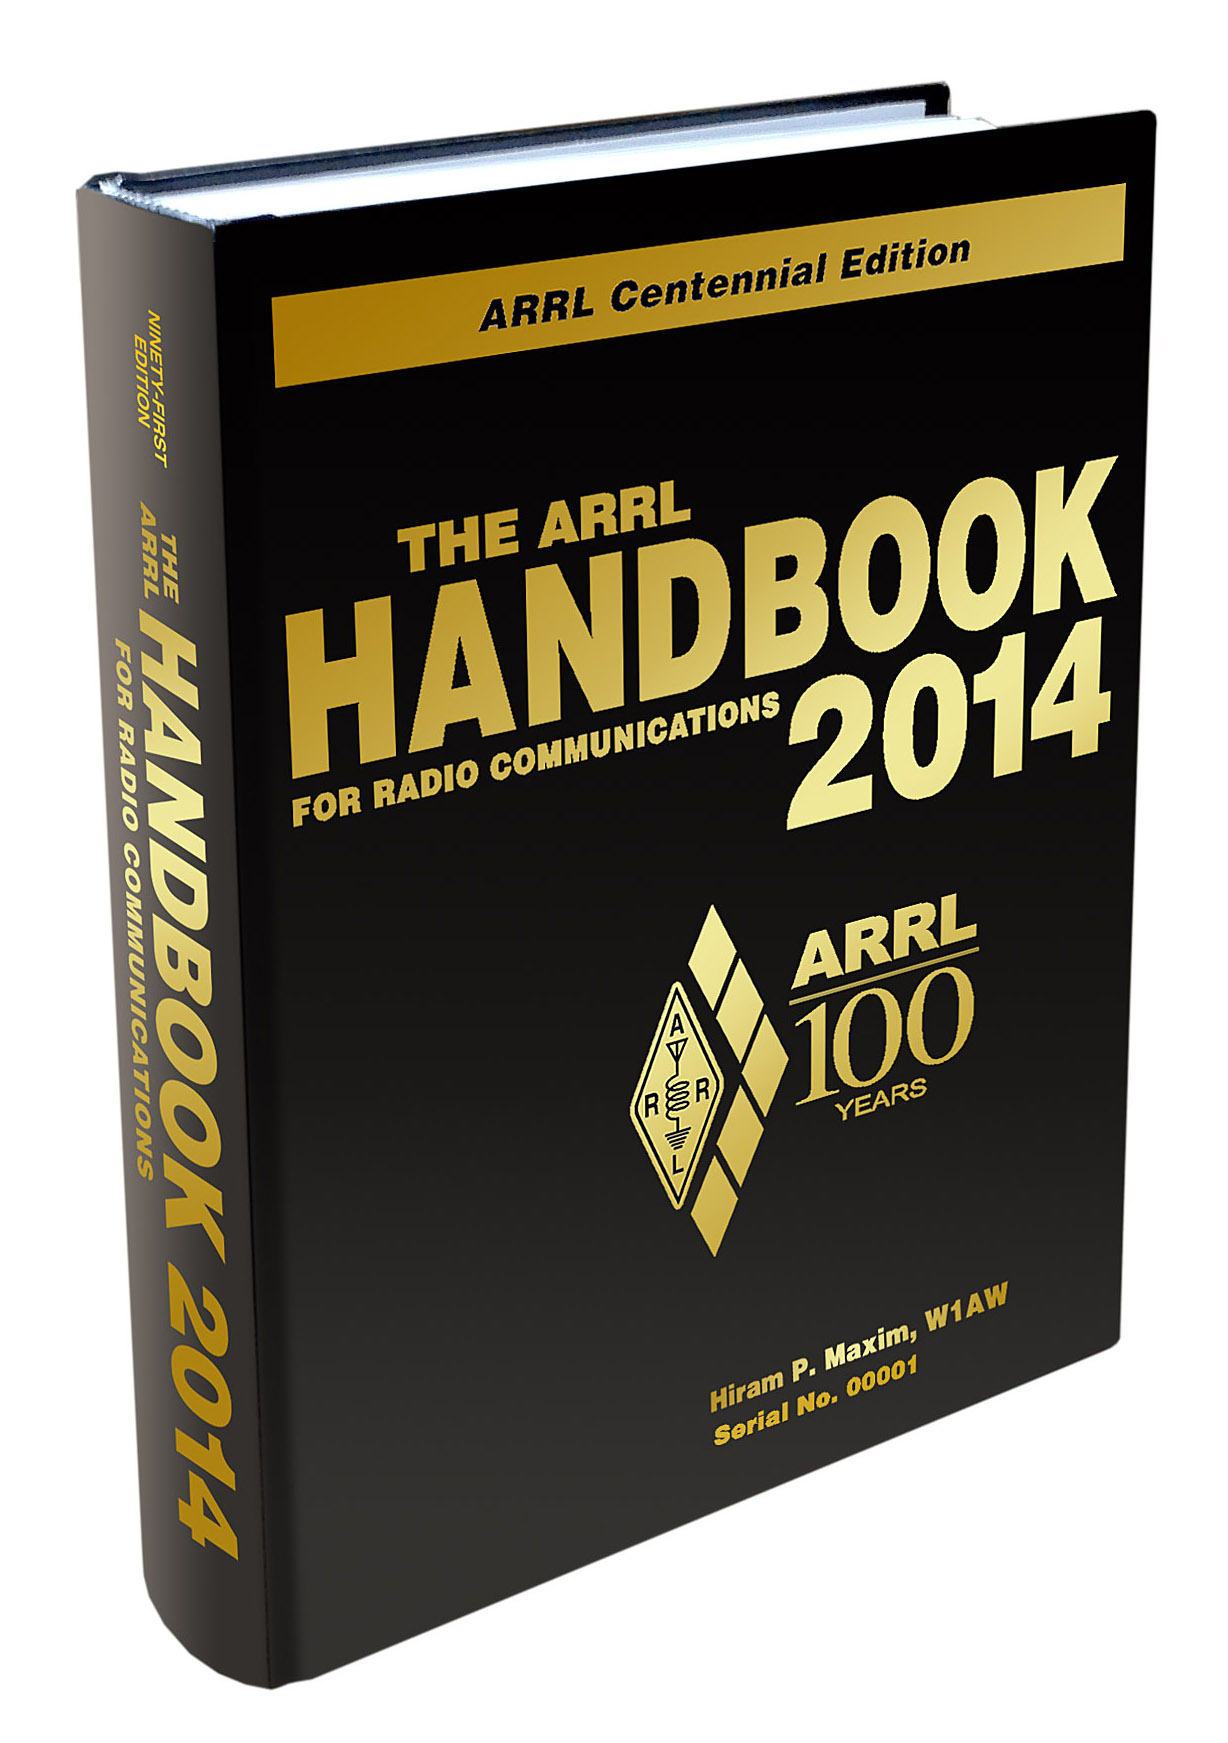 The ARRL Handbook Radio. Centennial Edition Science book Science. Science Centennial Edition.